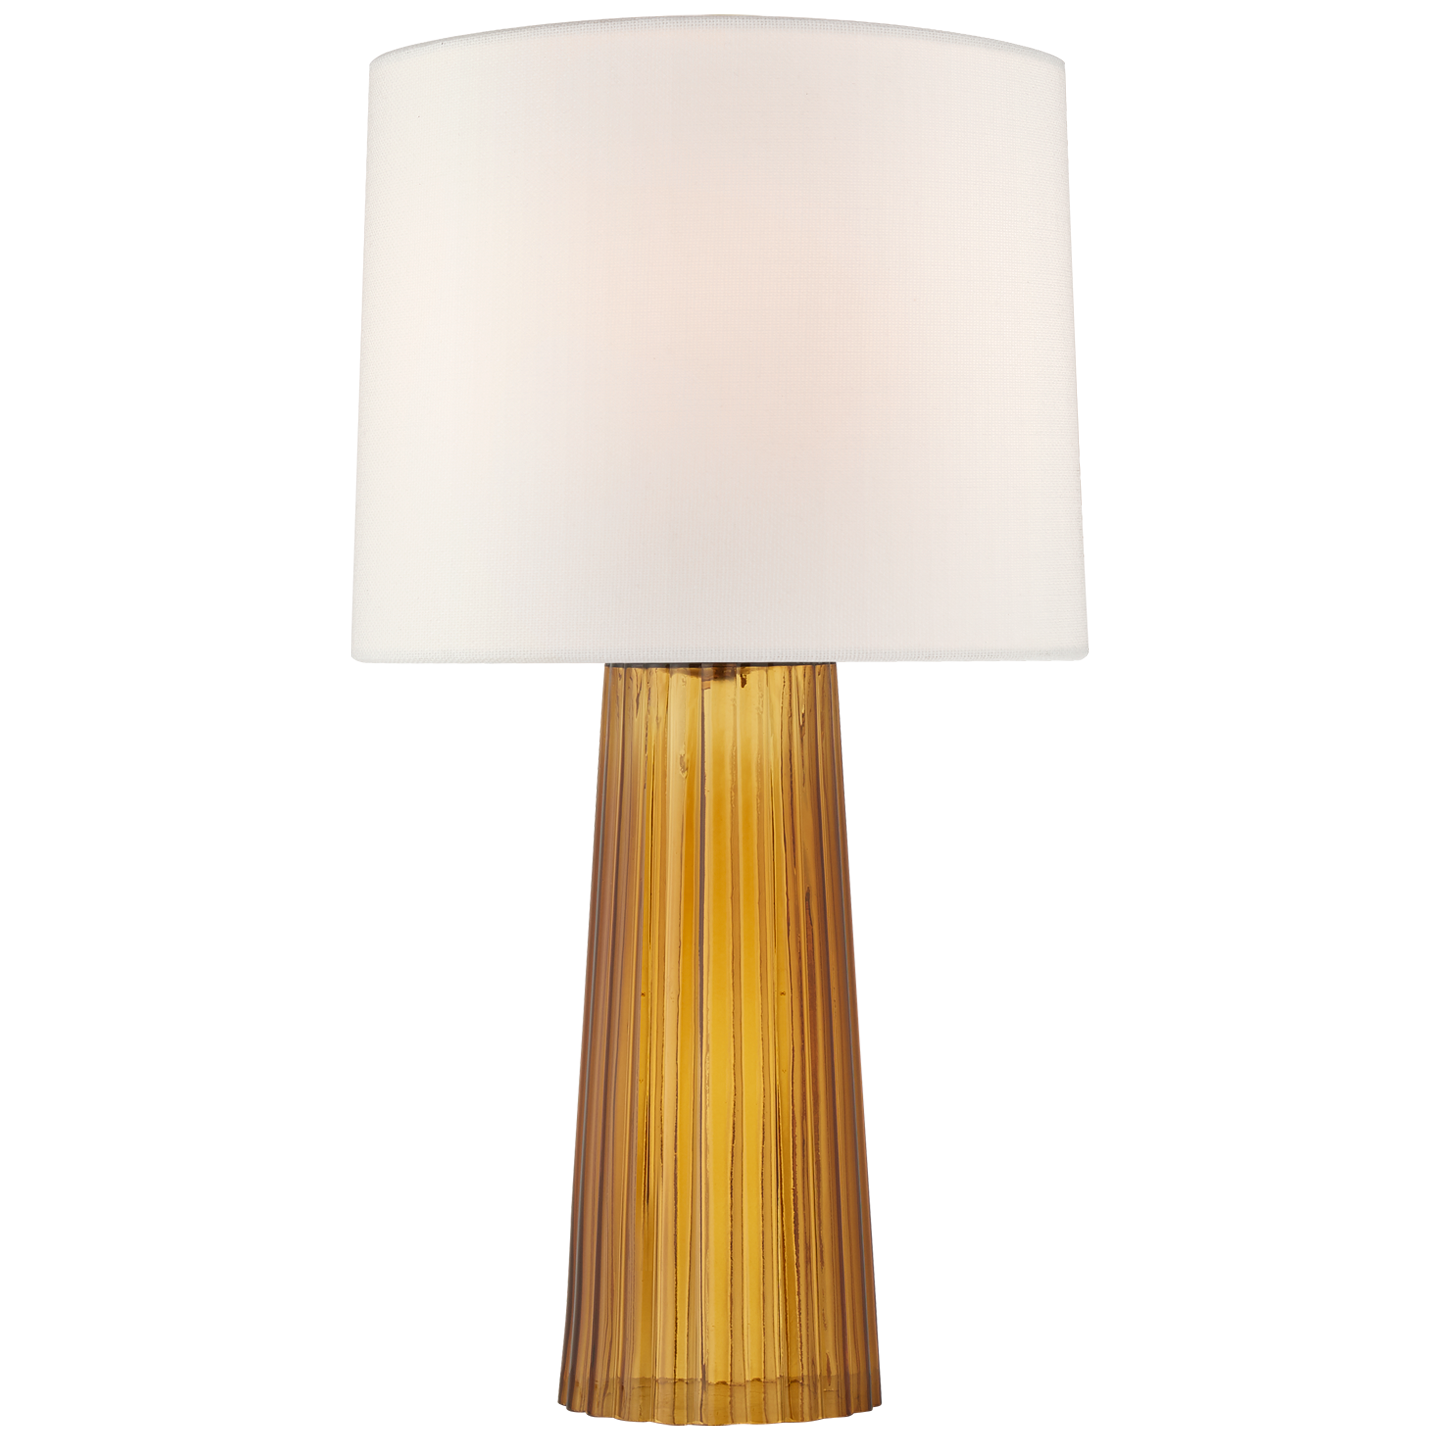 Настольная лампа Danube BBL3120AMB-L Visual Comfort